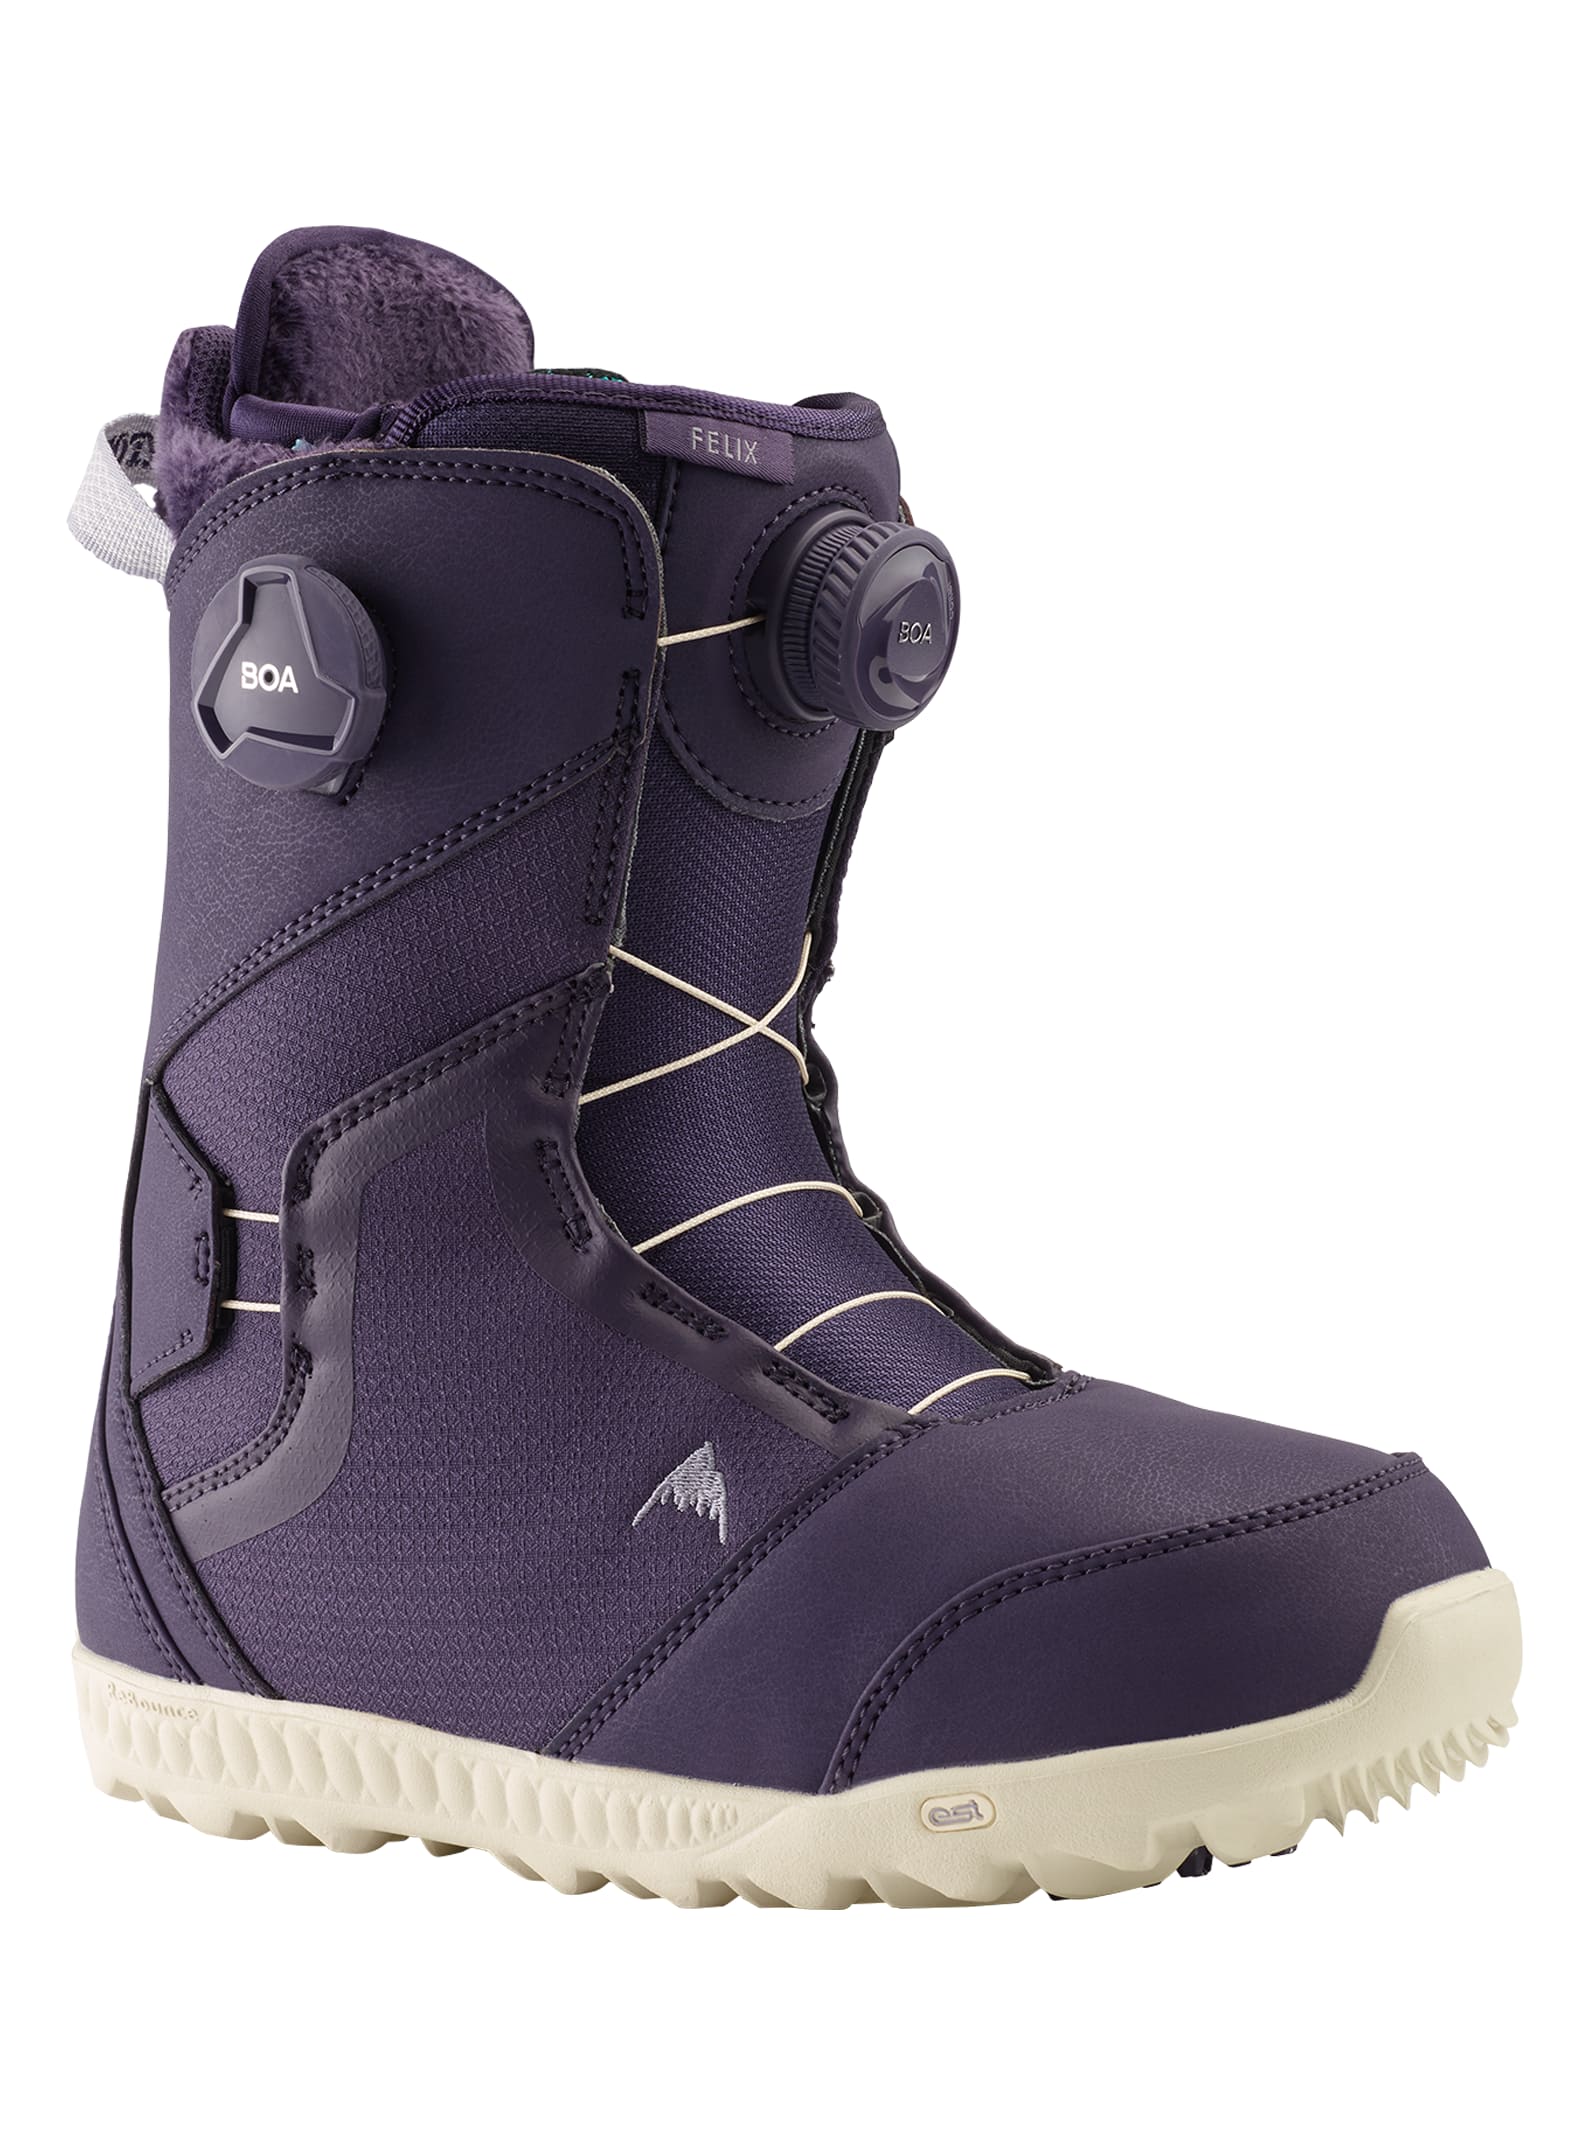 Burton - Boots de snowboard Felix Boa® femme, Purple Velvet, 6.5